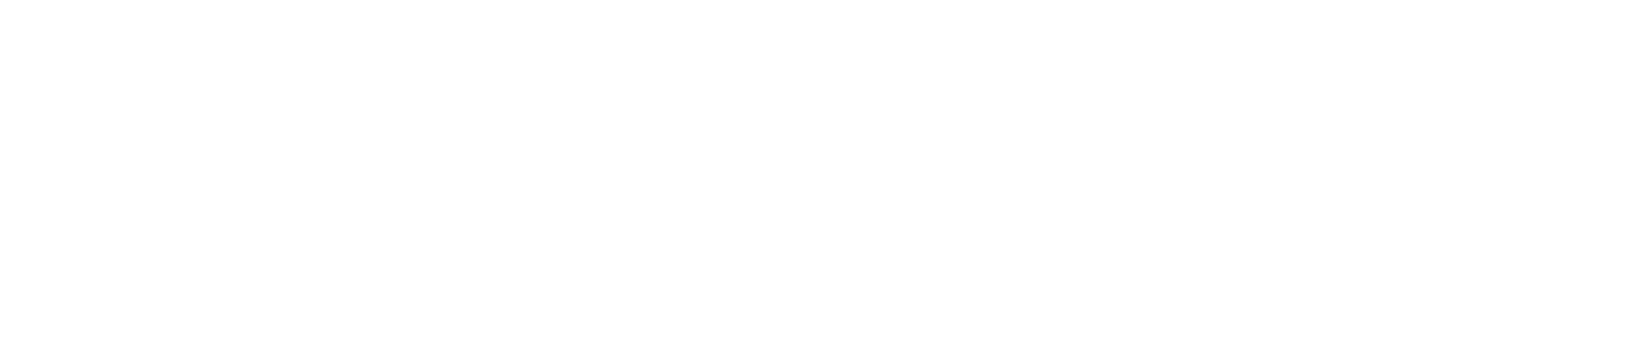 NFT Cluj logo